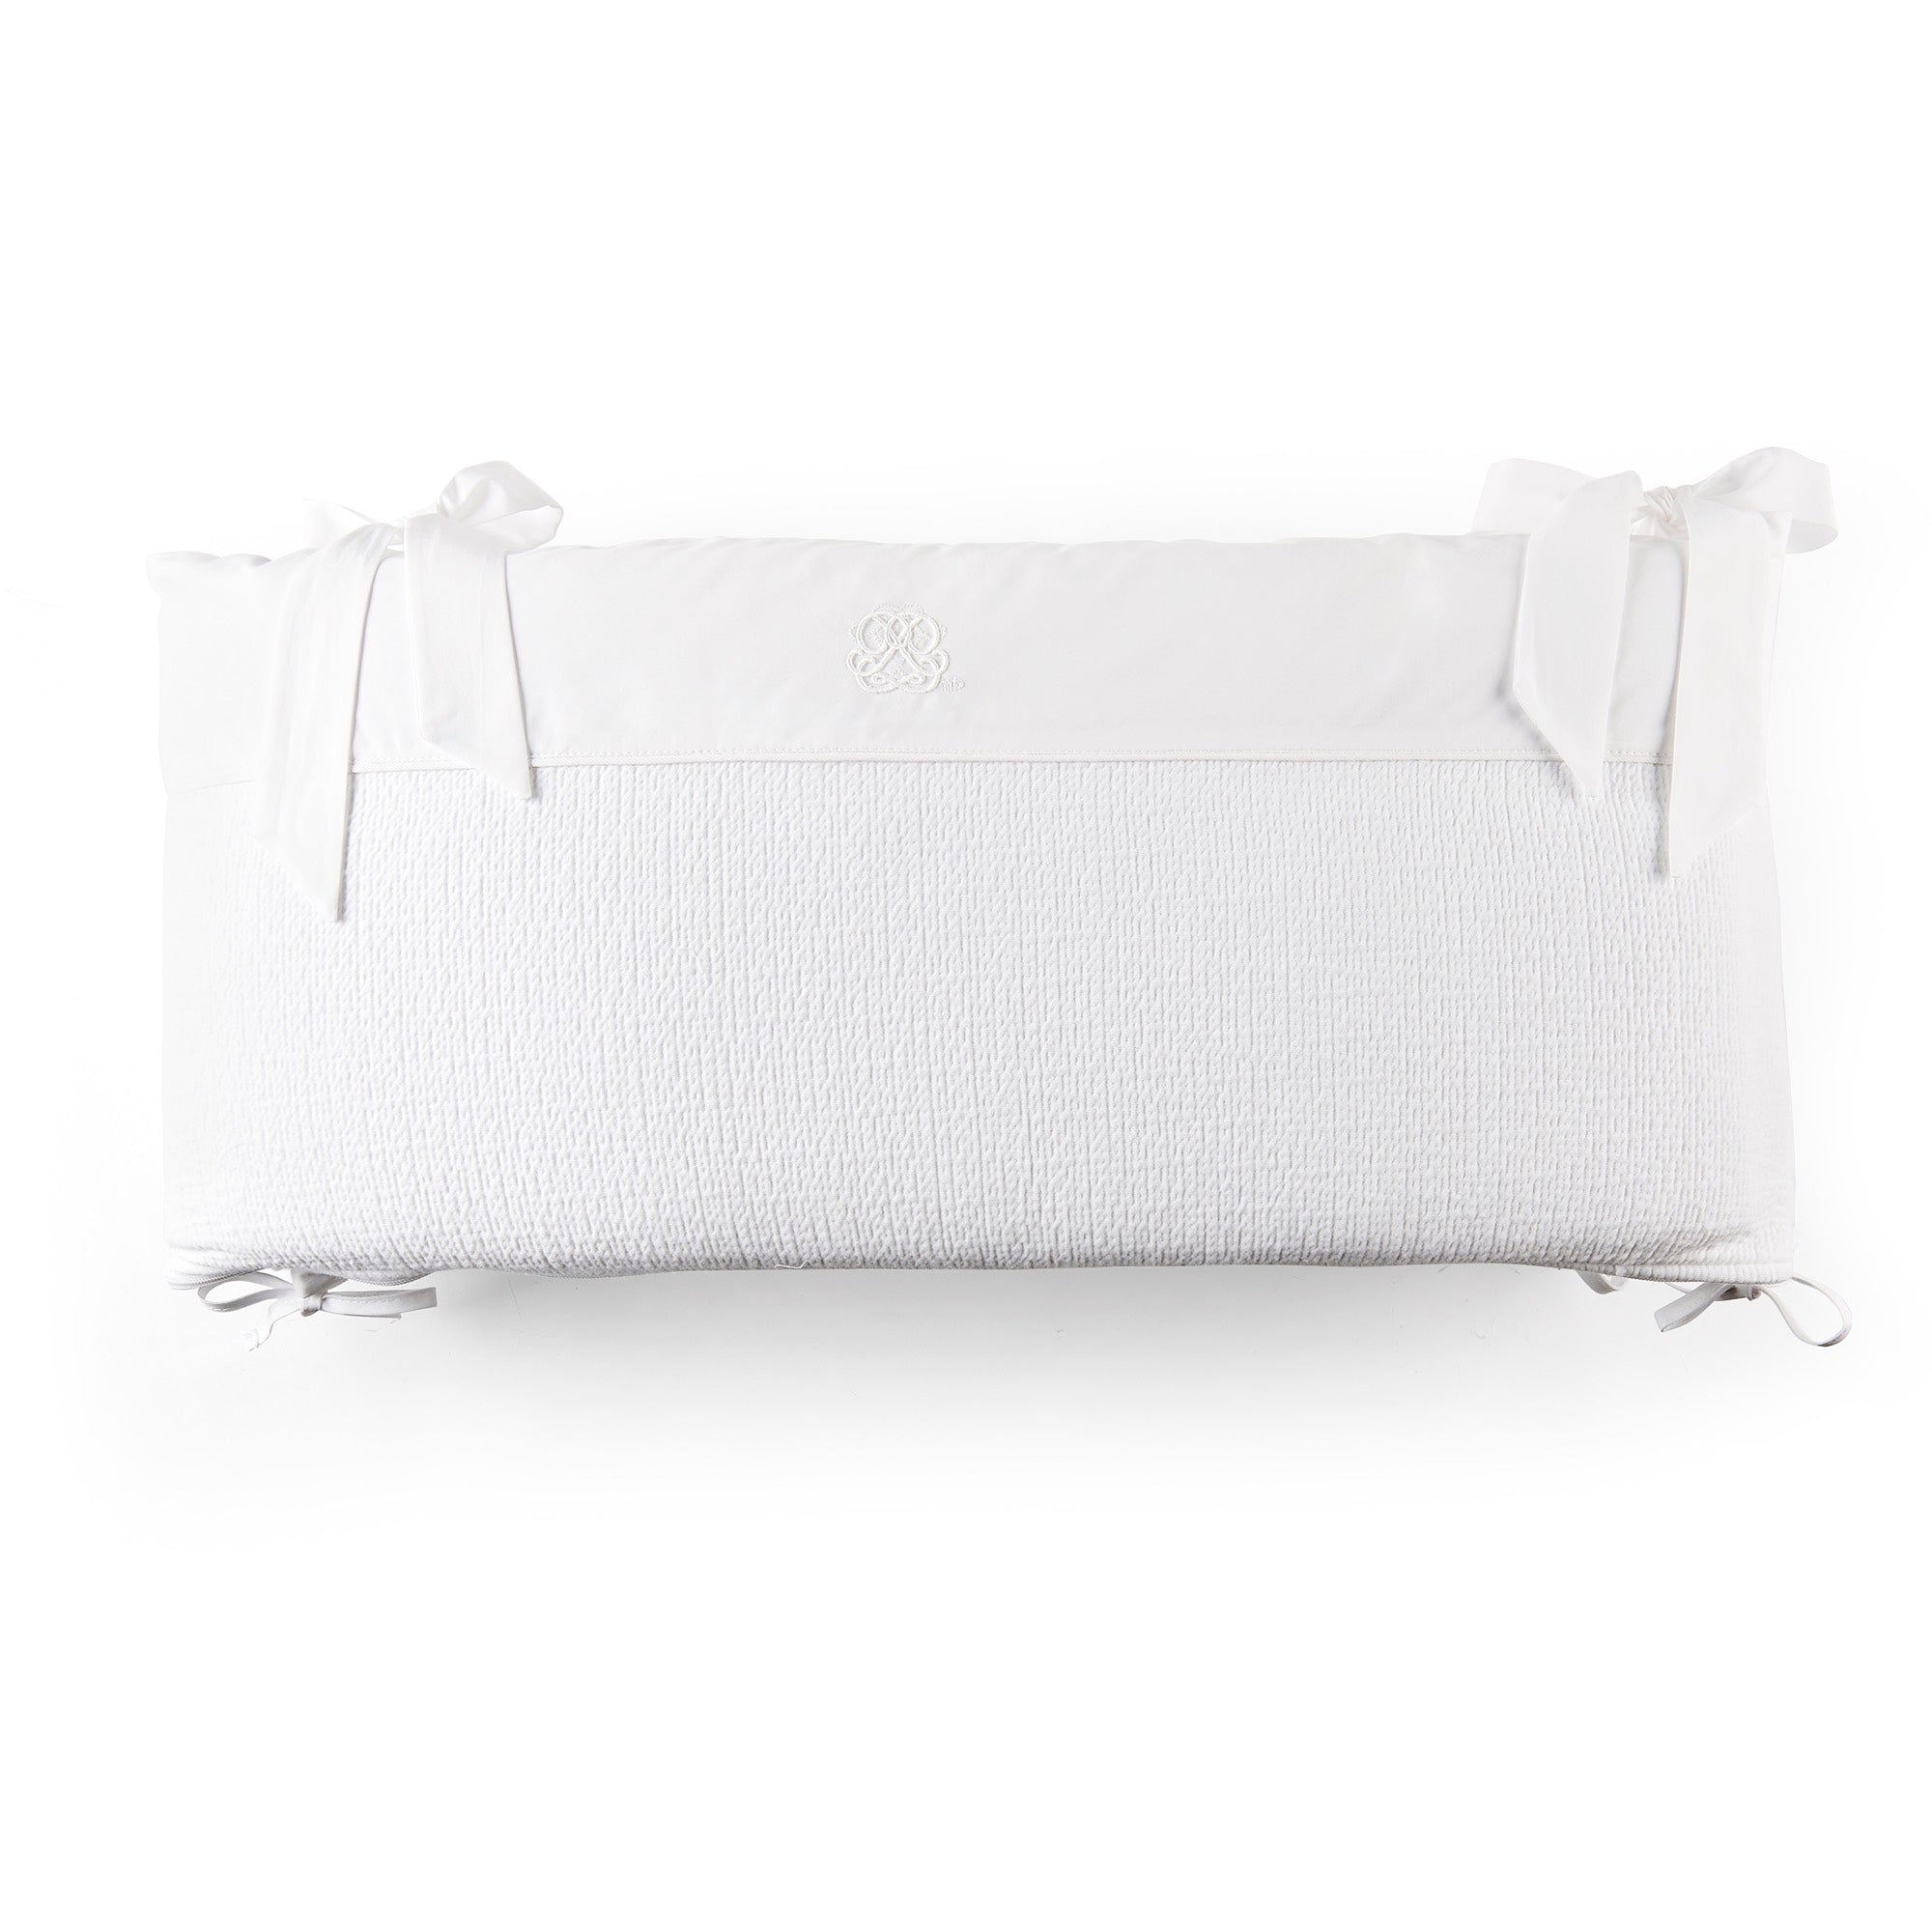 Theophile & Patachou Bed Bumper 70 cm - Cotton White